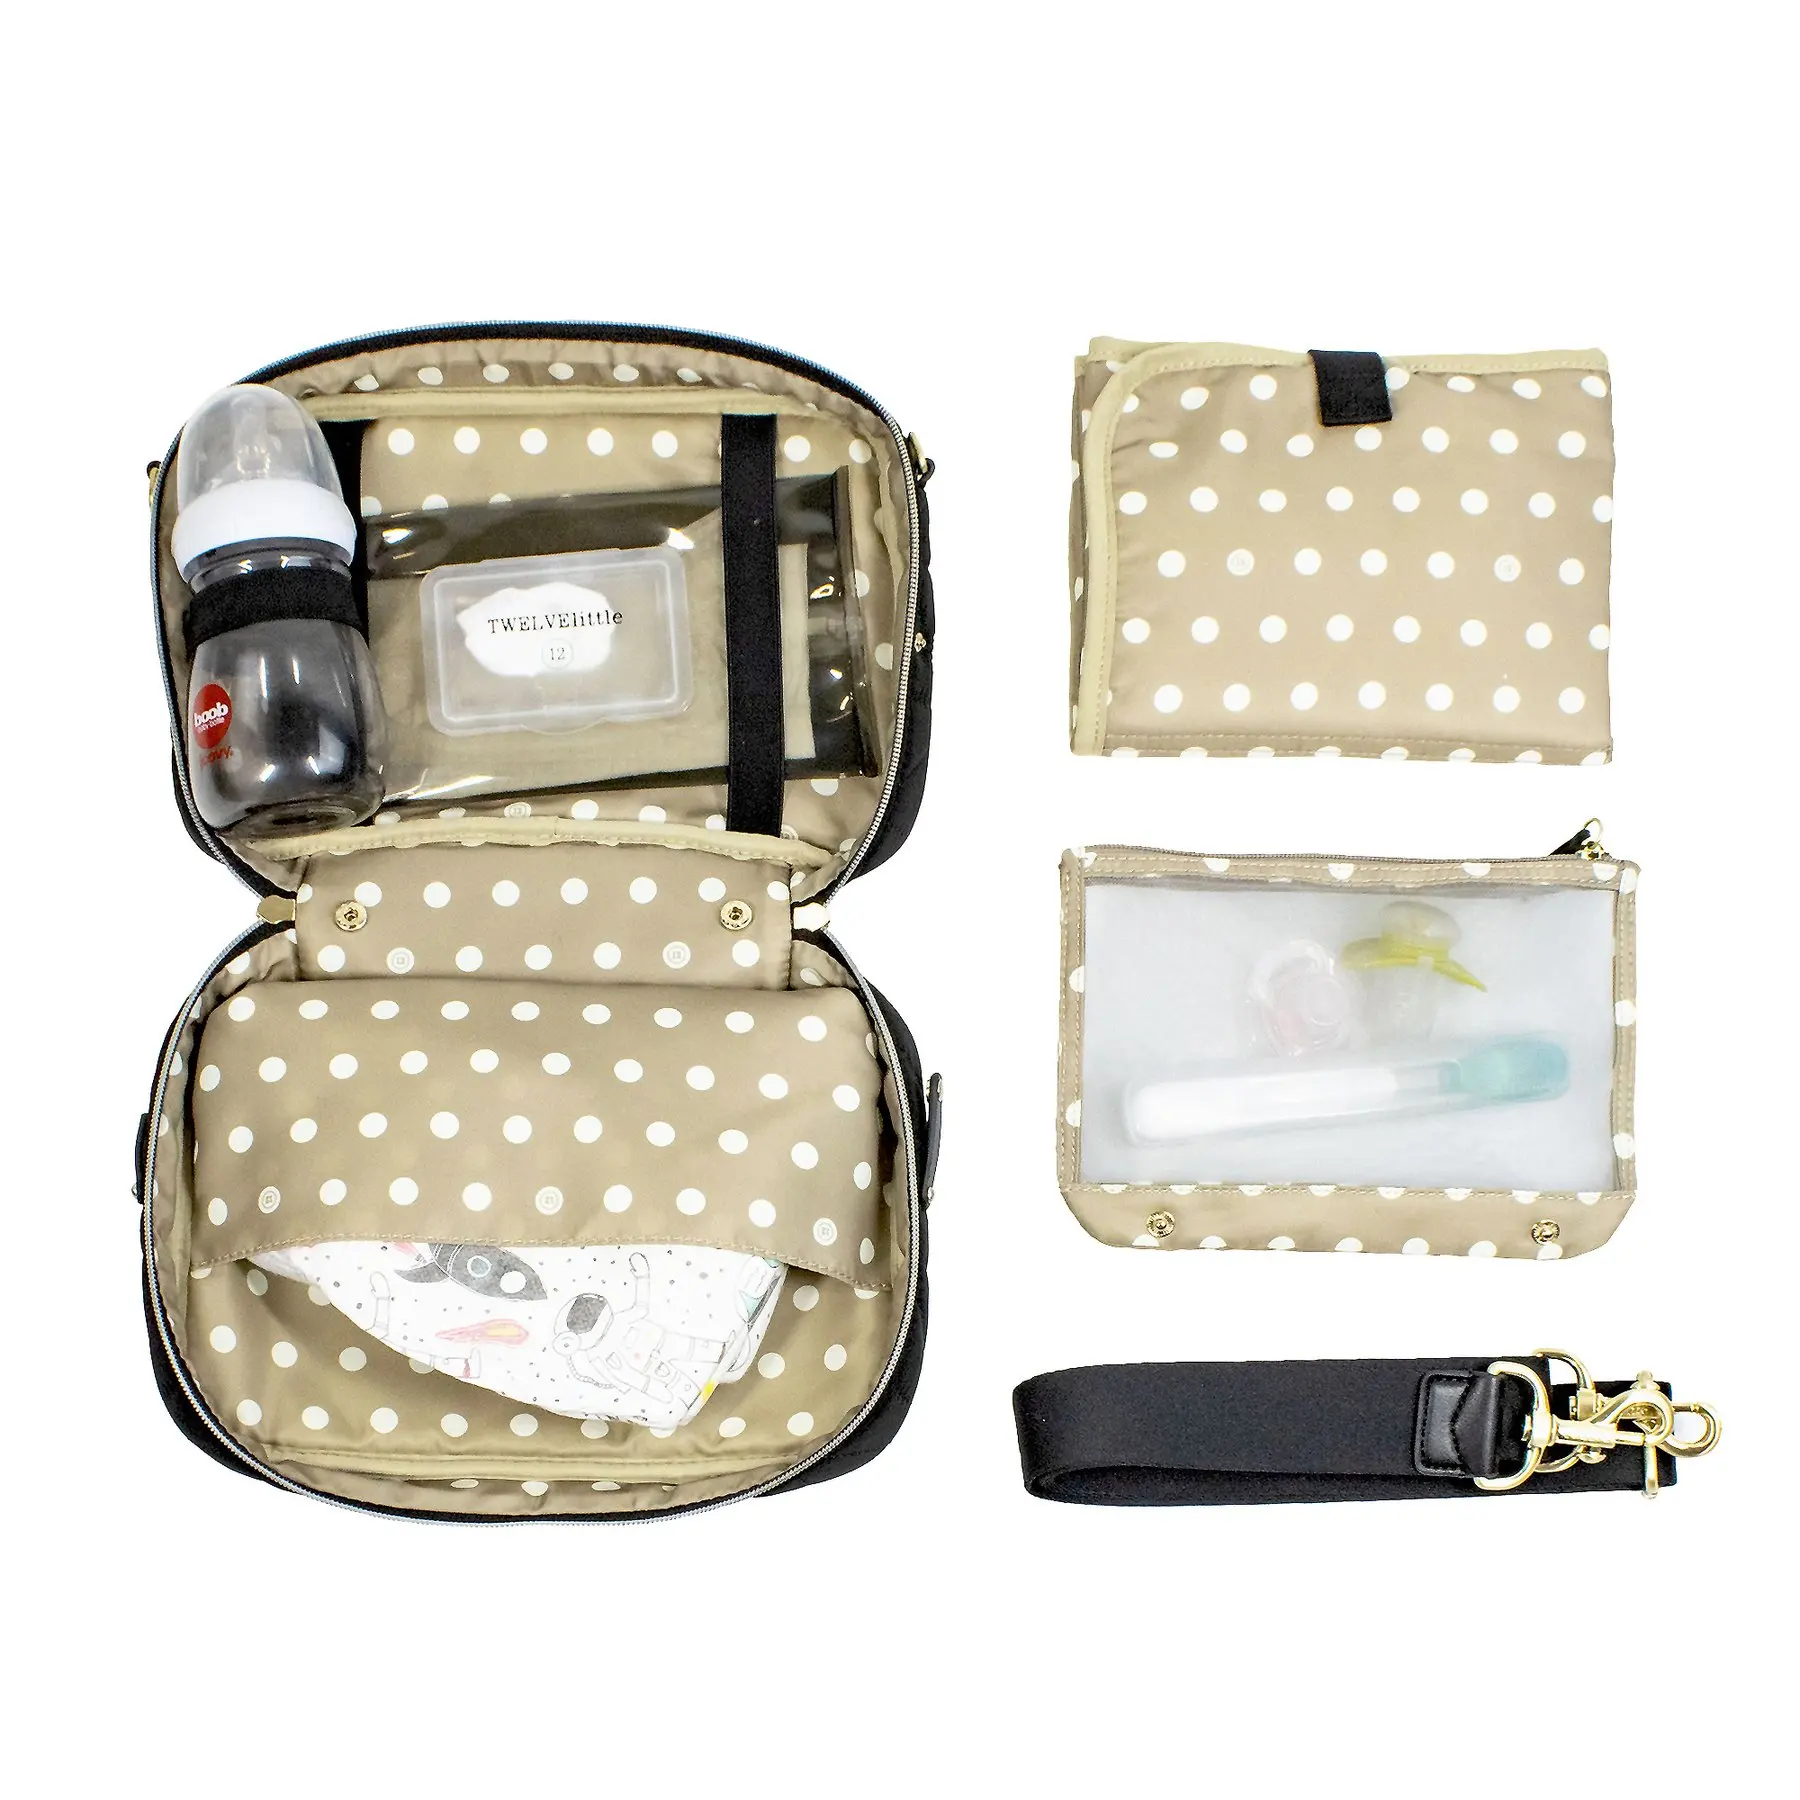 DIAPER BAG CLUTCH IN BLACK- Lightweight Travel Station Kit for Baby